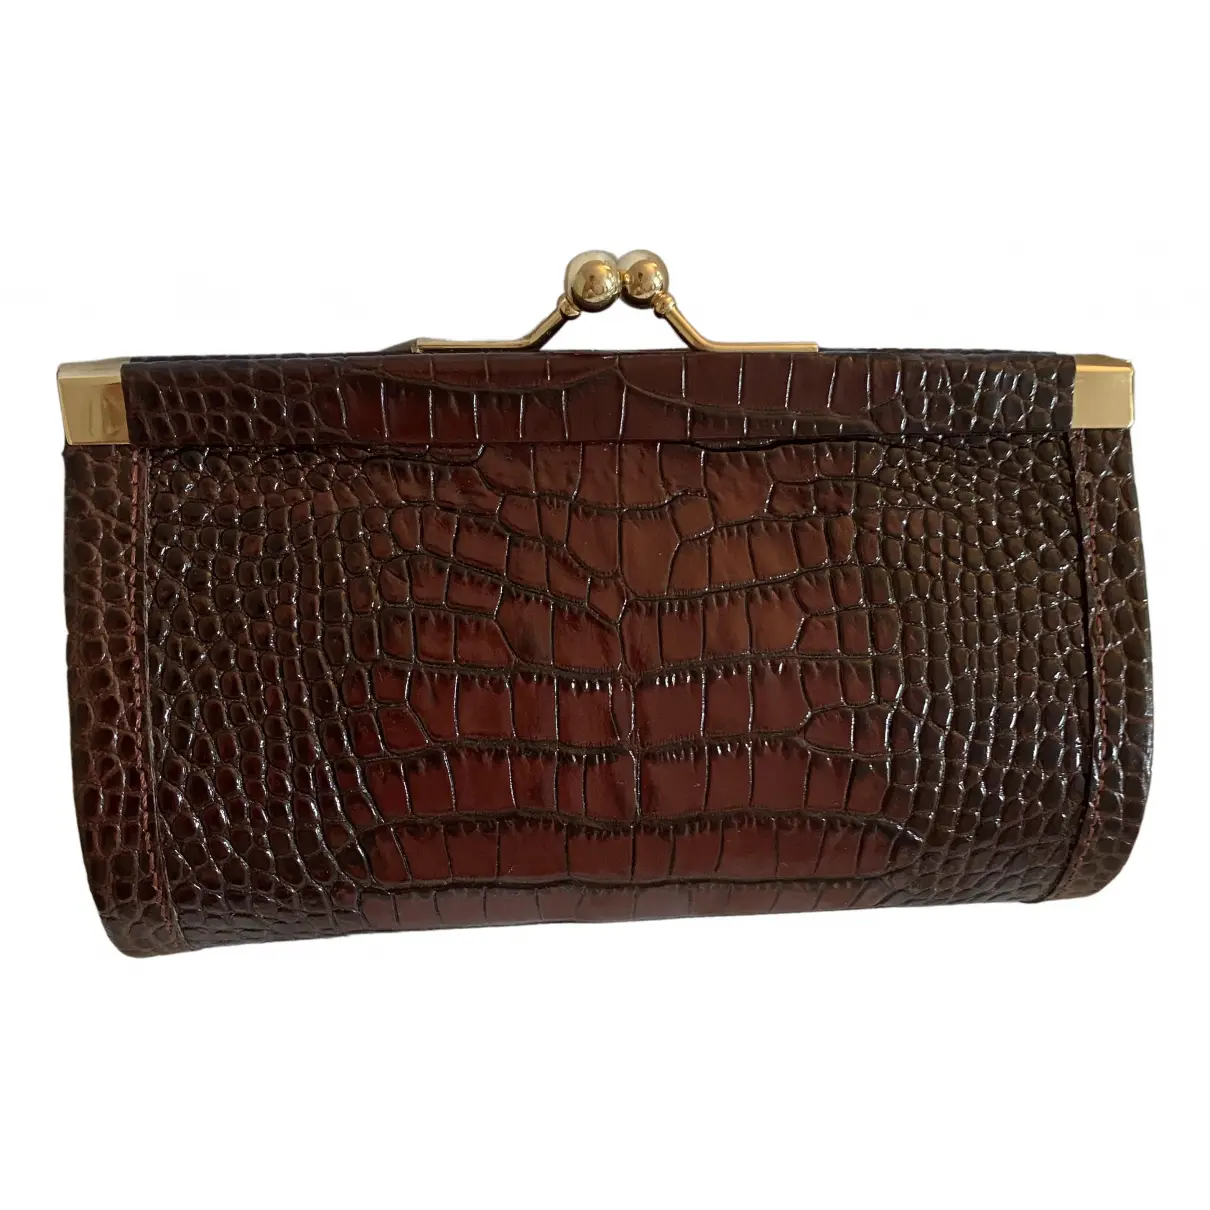 Leather handbag Erdem x H&M